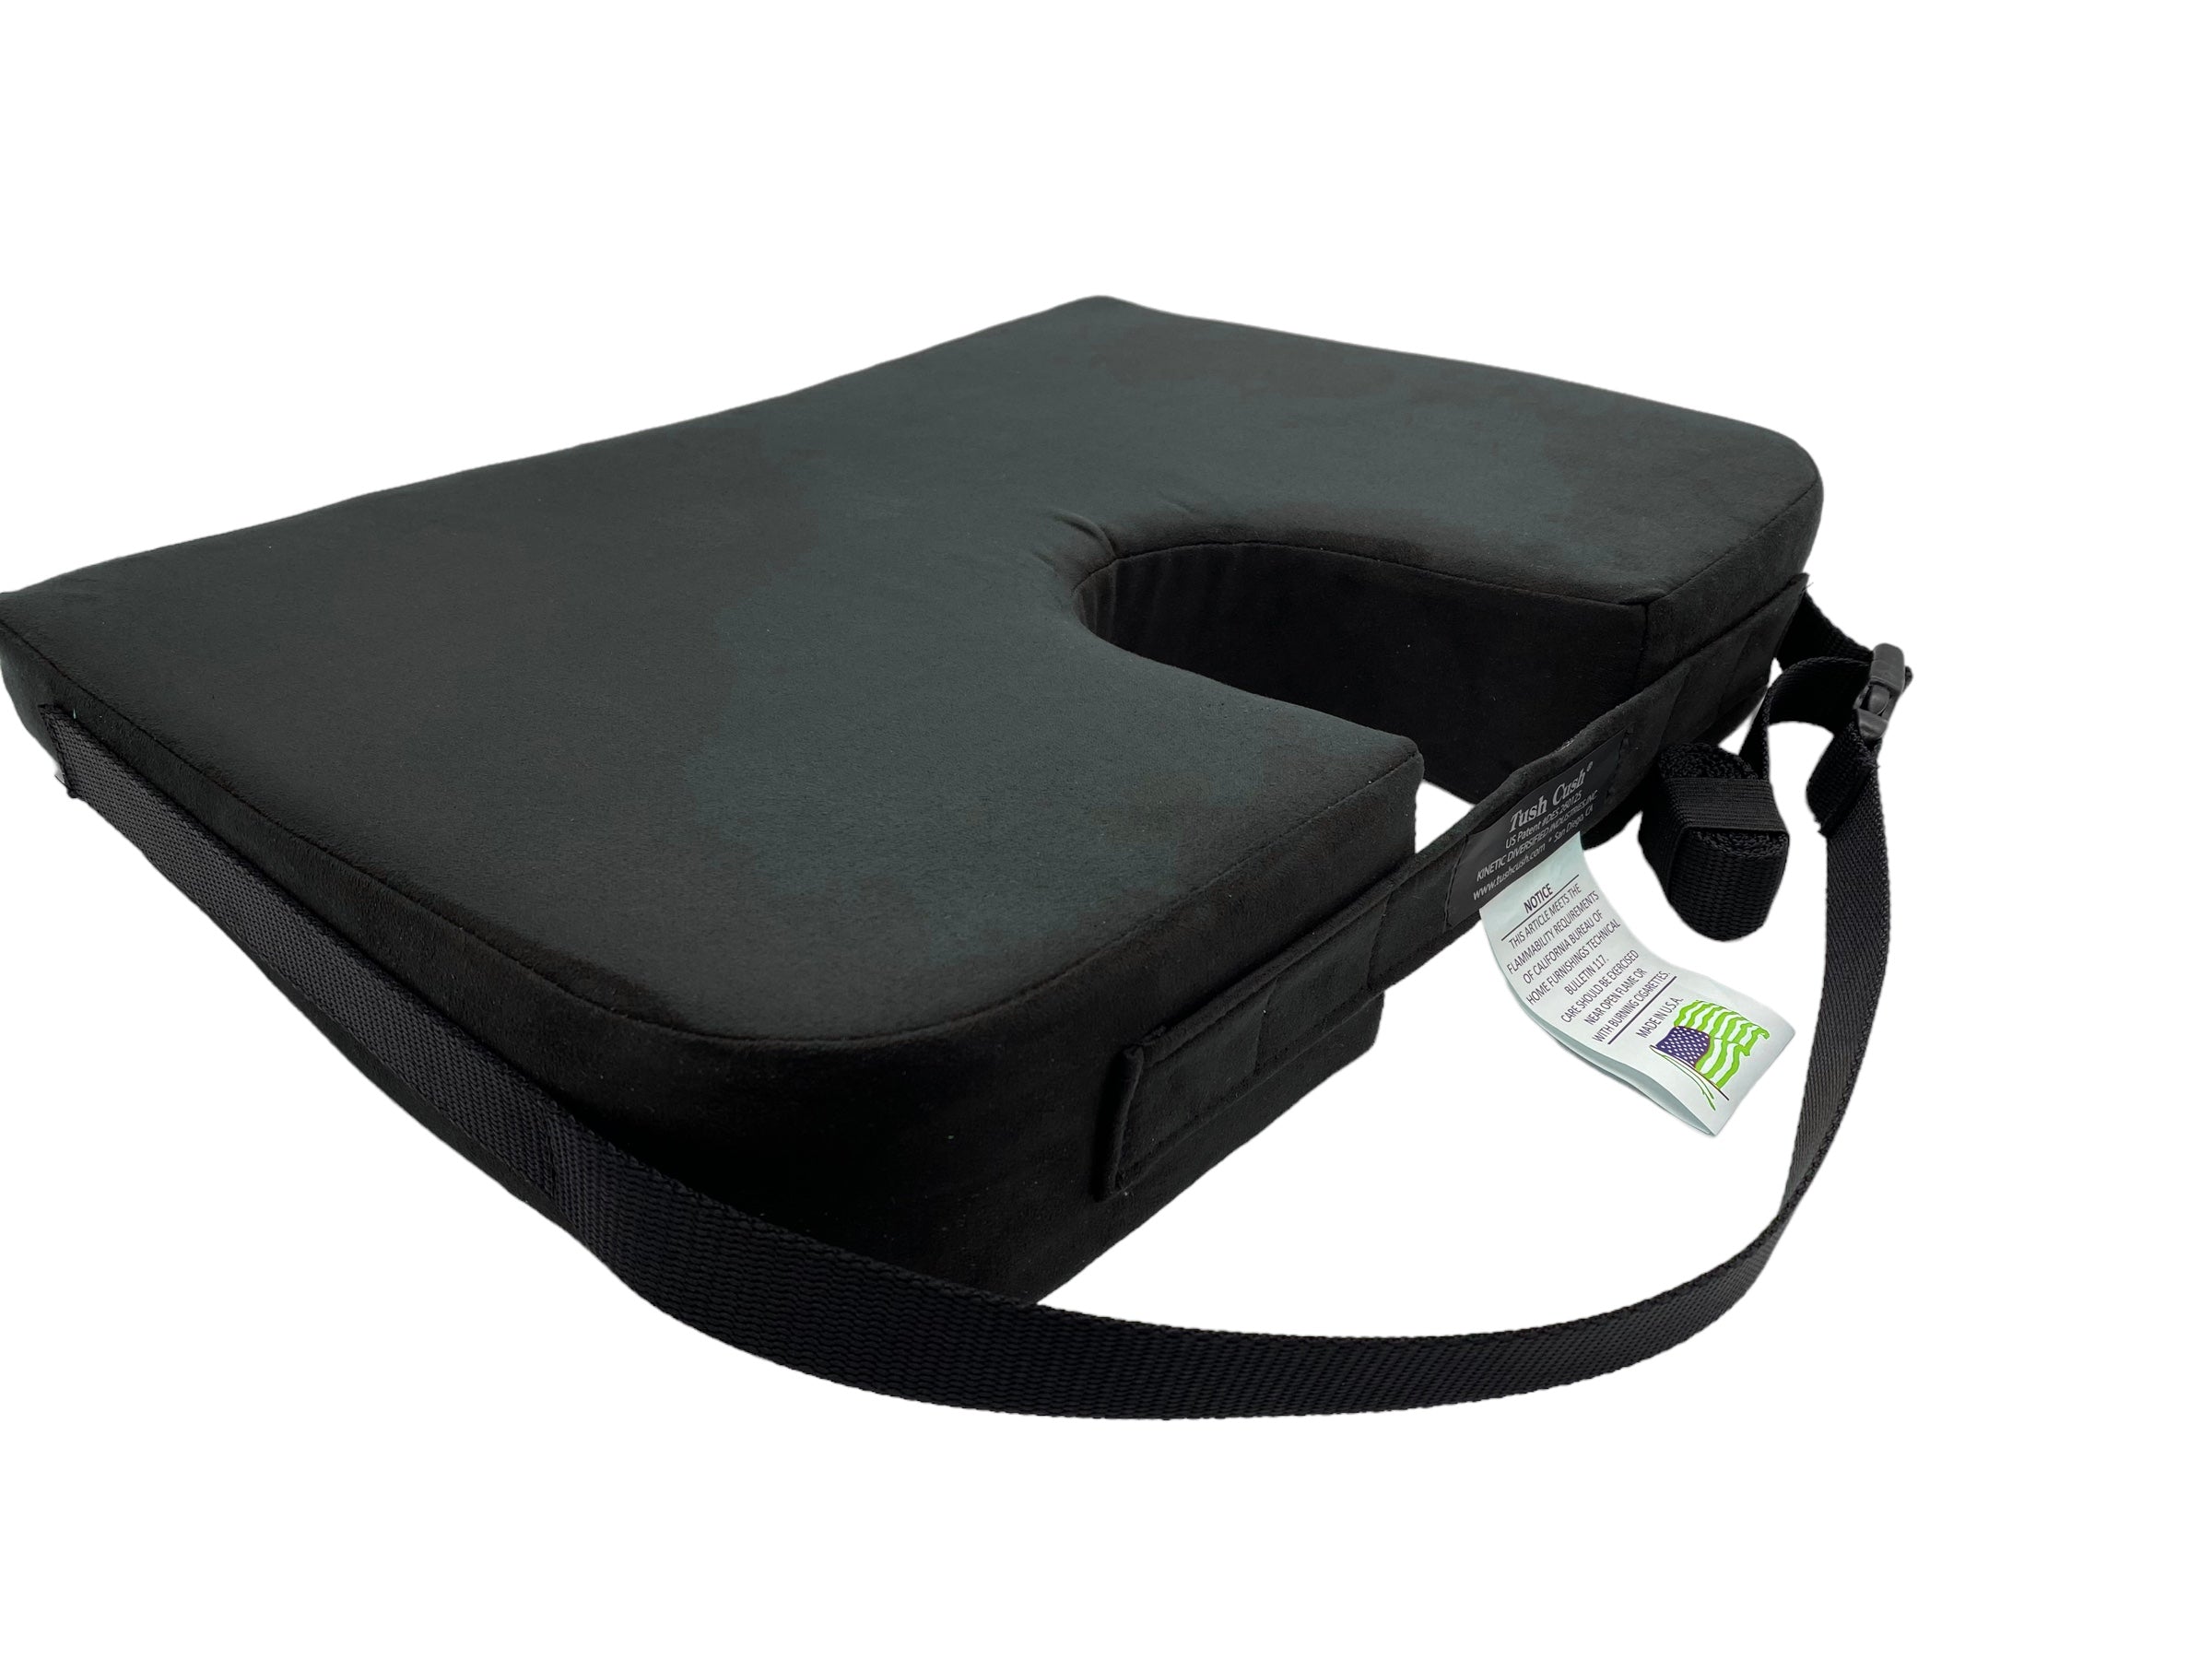 SALE! Original Tush Cush Orthopedic Seat Cushion 14x18 Black Cow Print